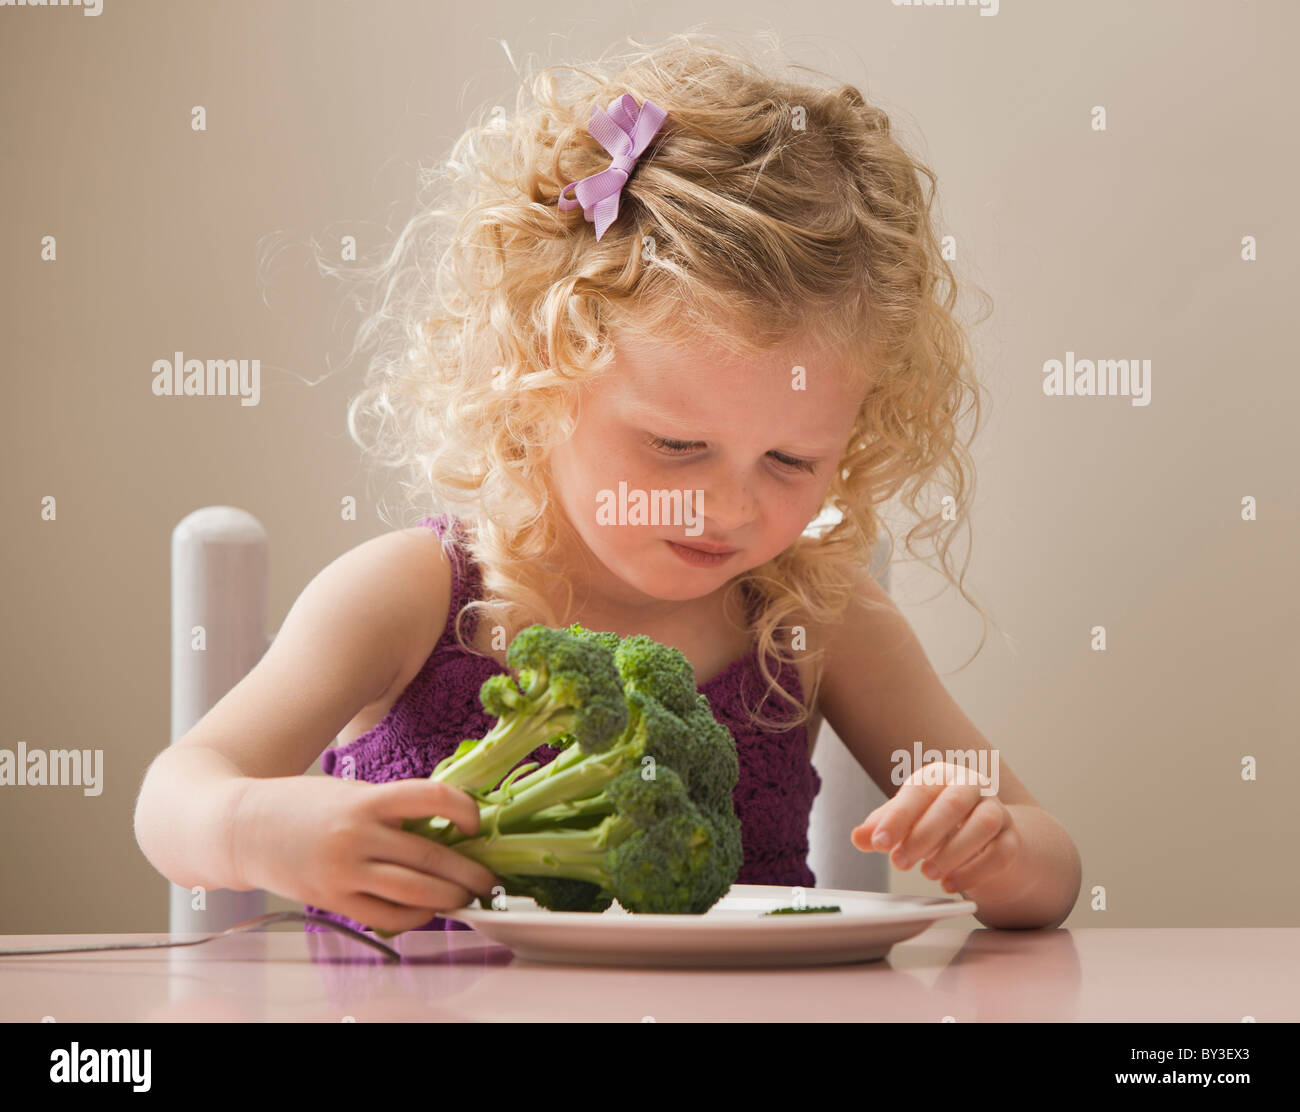 USA, Utah, Lehi, girl (2-3) eating broccoli Stock Photo